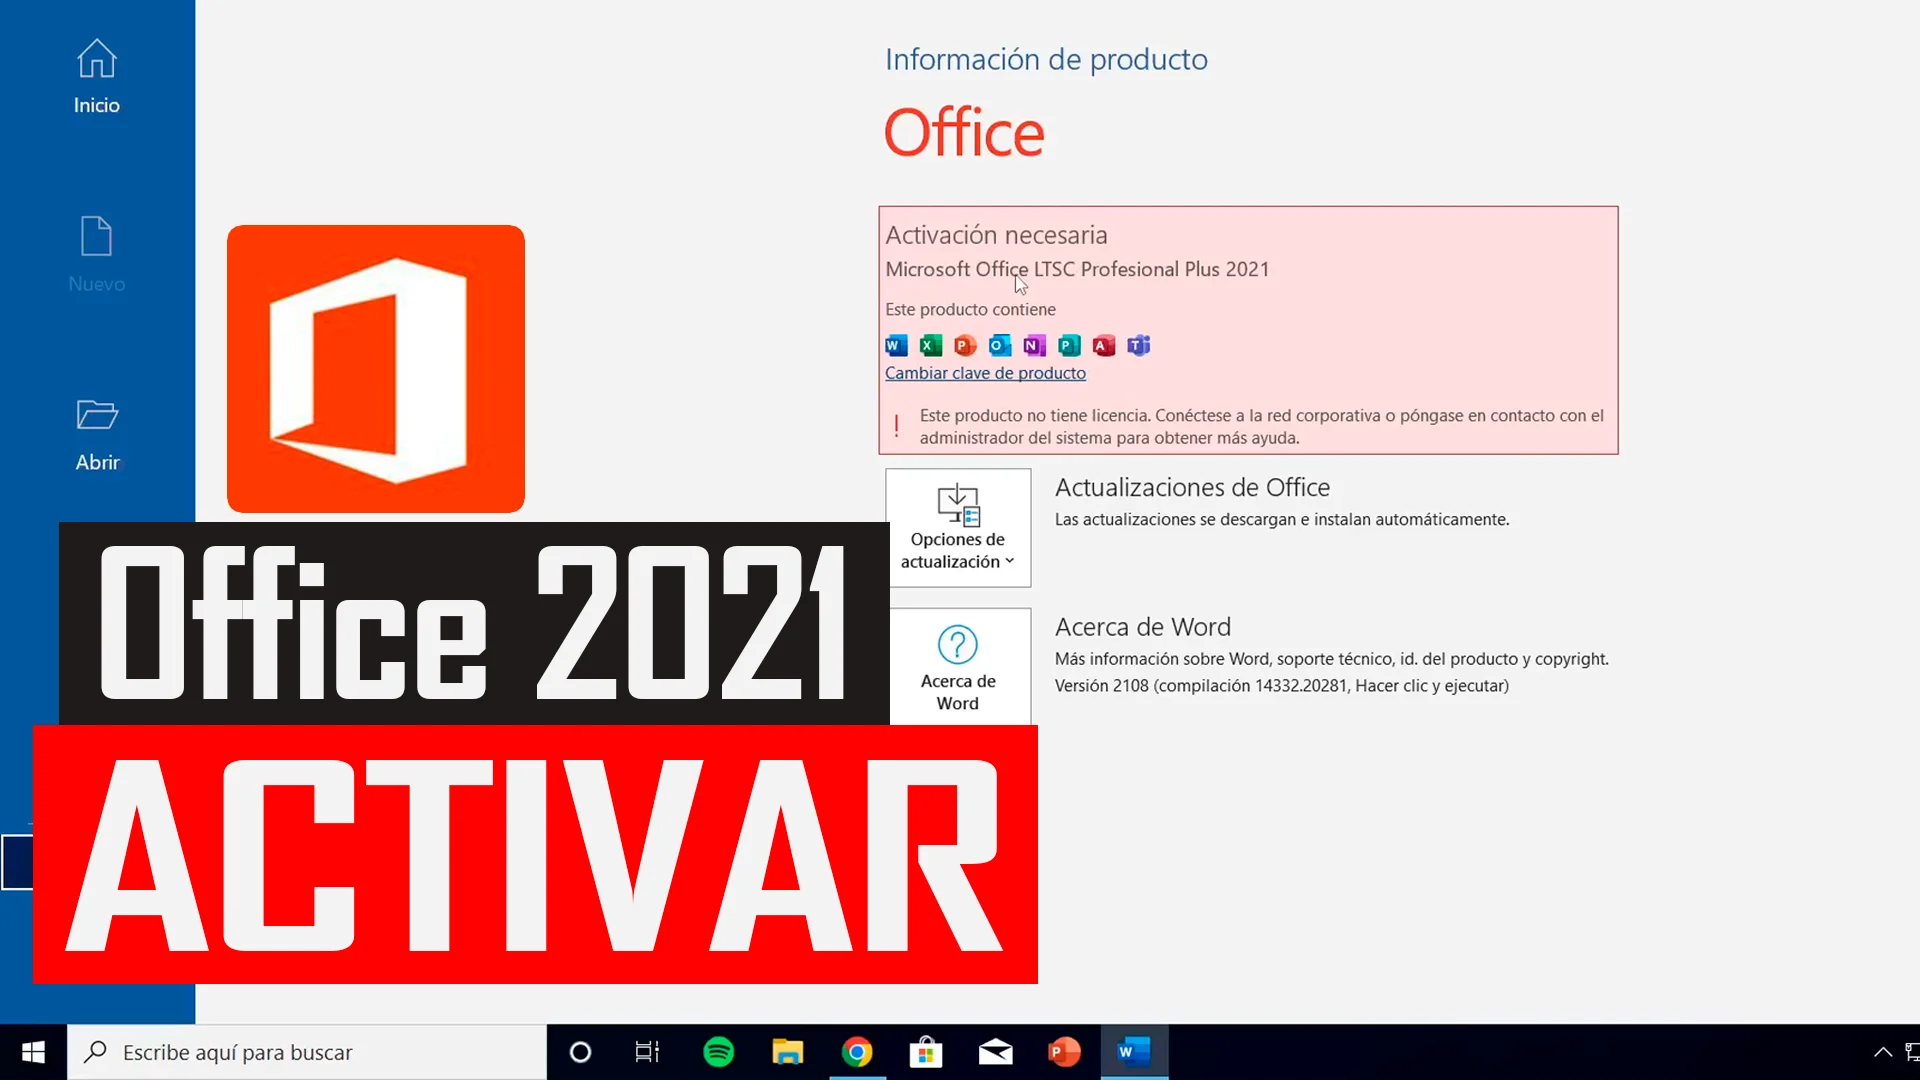 Activar Office 2021 Professional Plus  Activacion necesaria Microsoft  Office LTSC 2021 SOLUCION on Vimeo